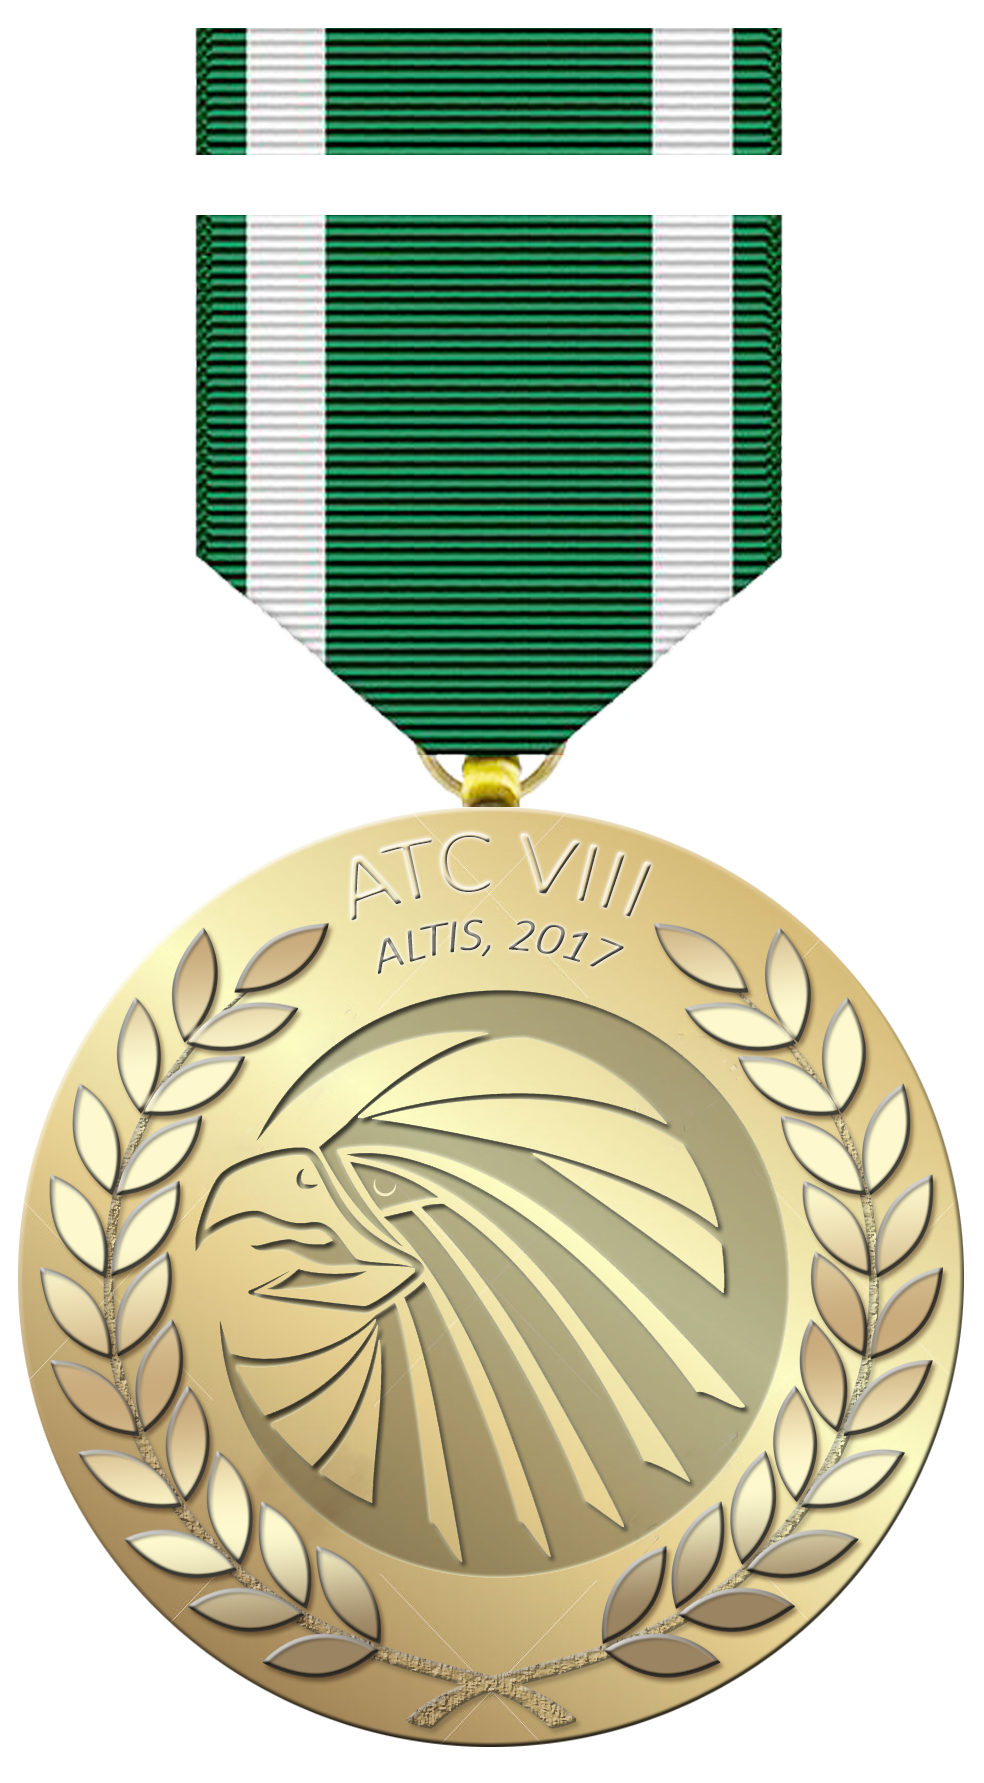 medaglia atc 8-ribbon.png